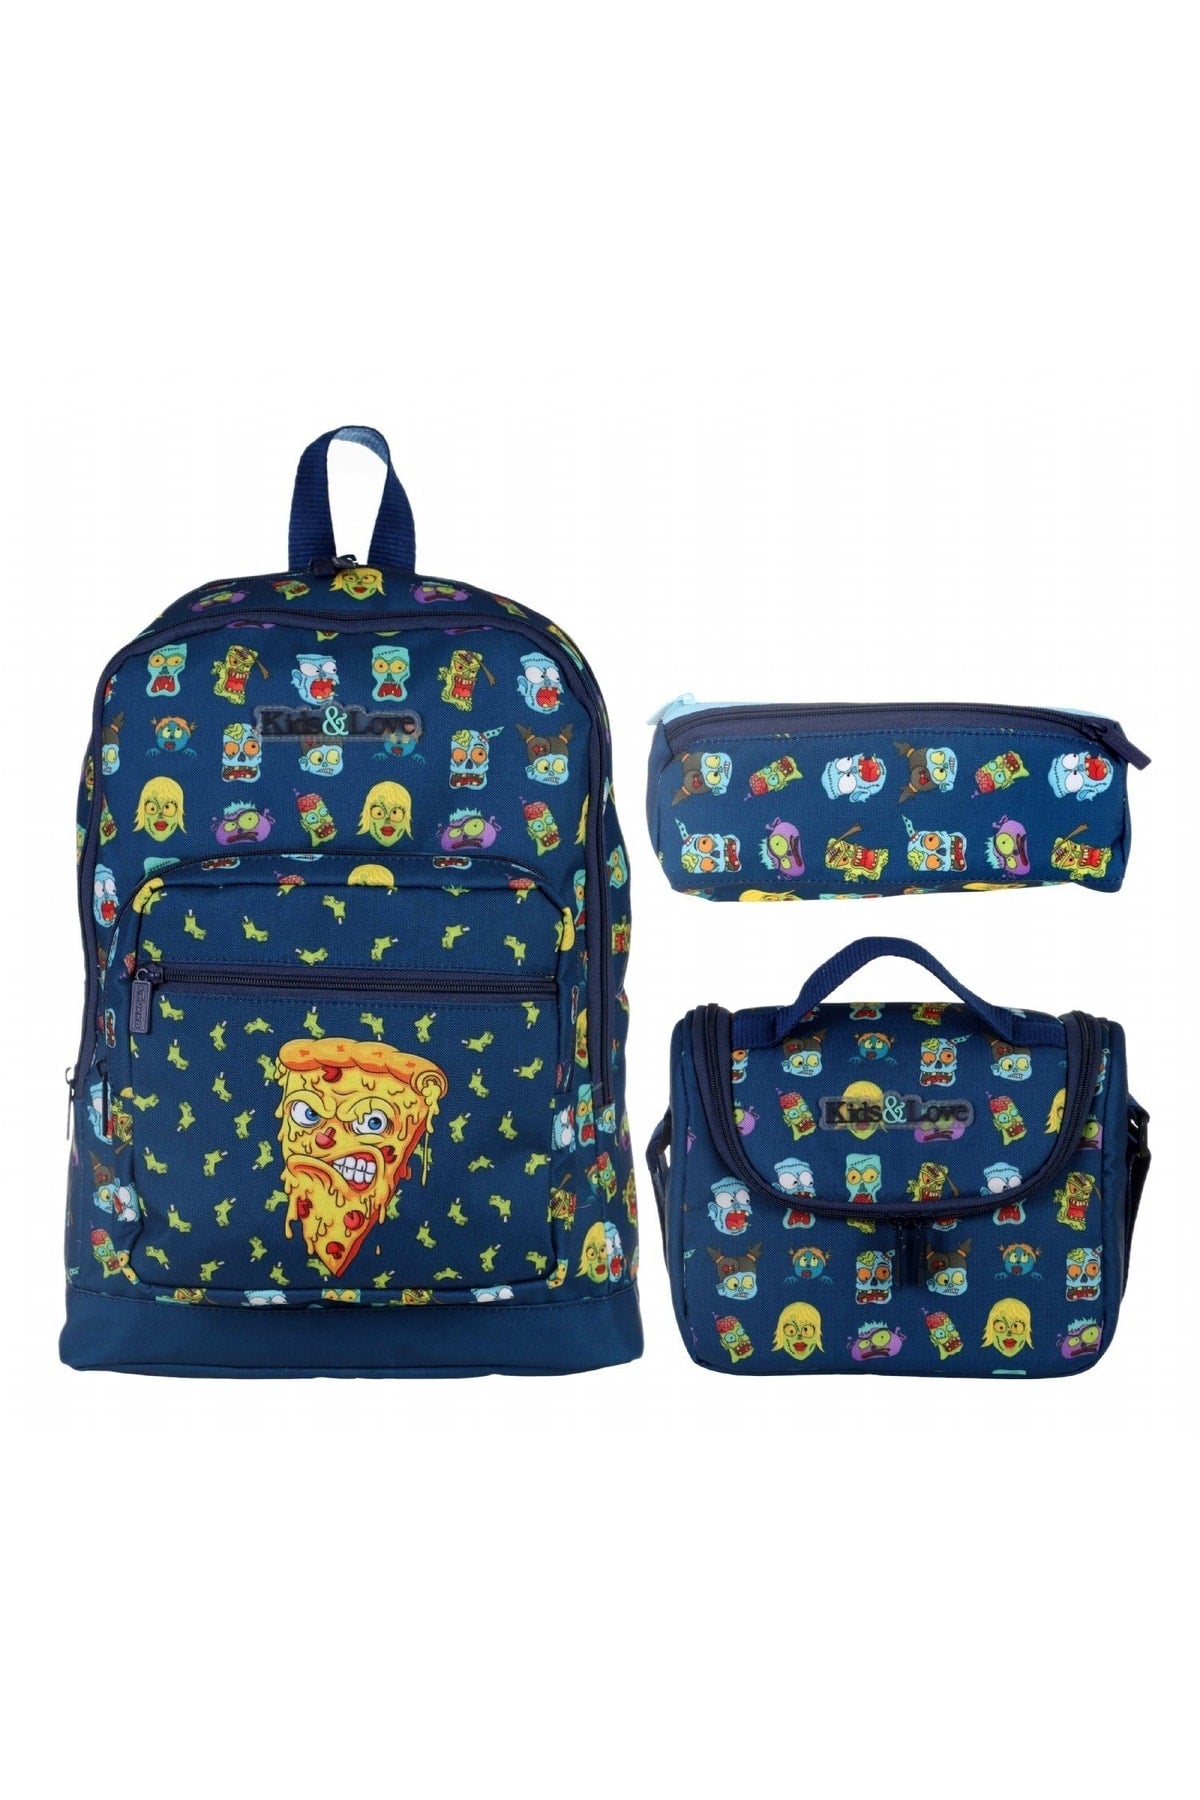 Kids&love Navy Blue Zombie Pizza Primary School Bag Set - Boys